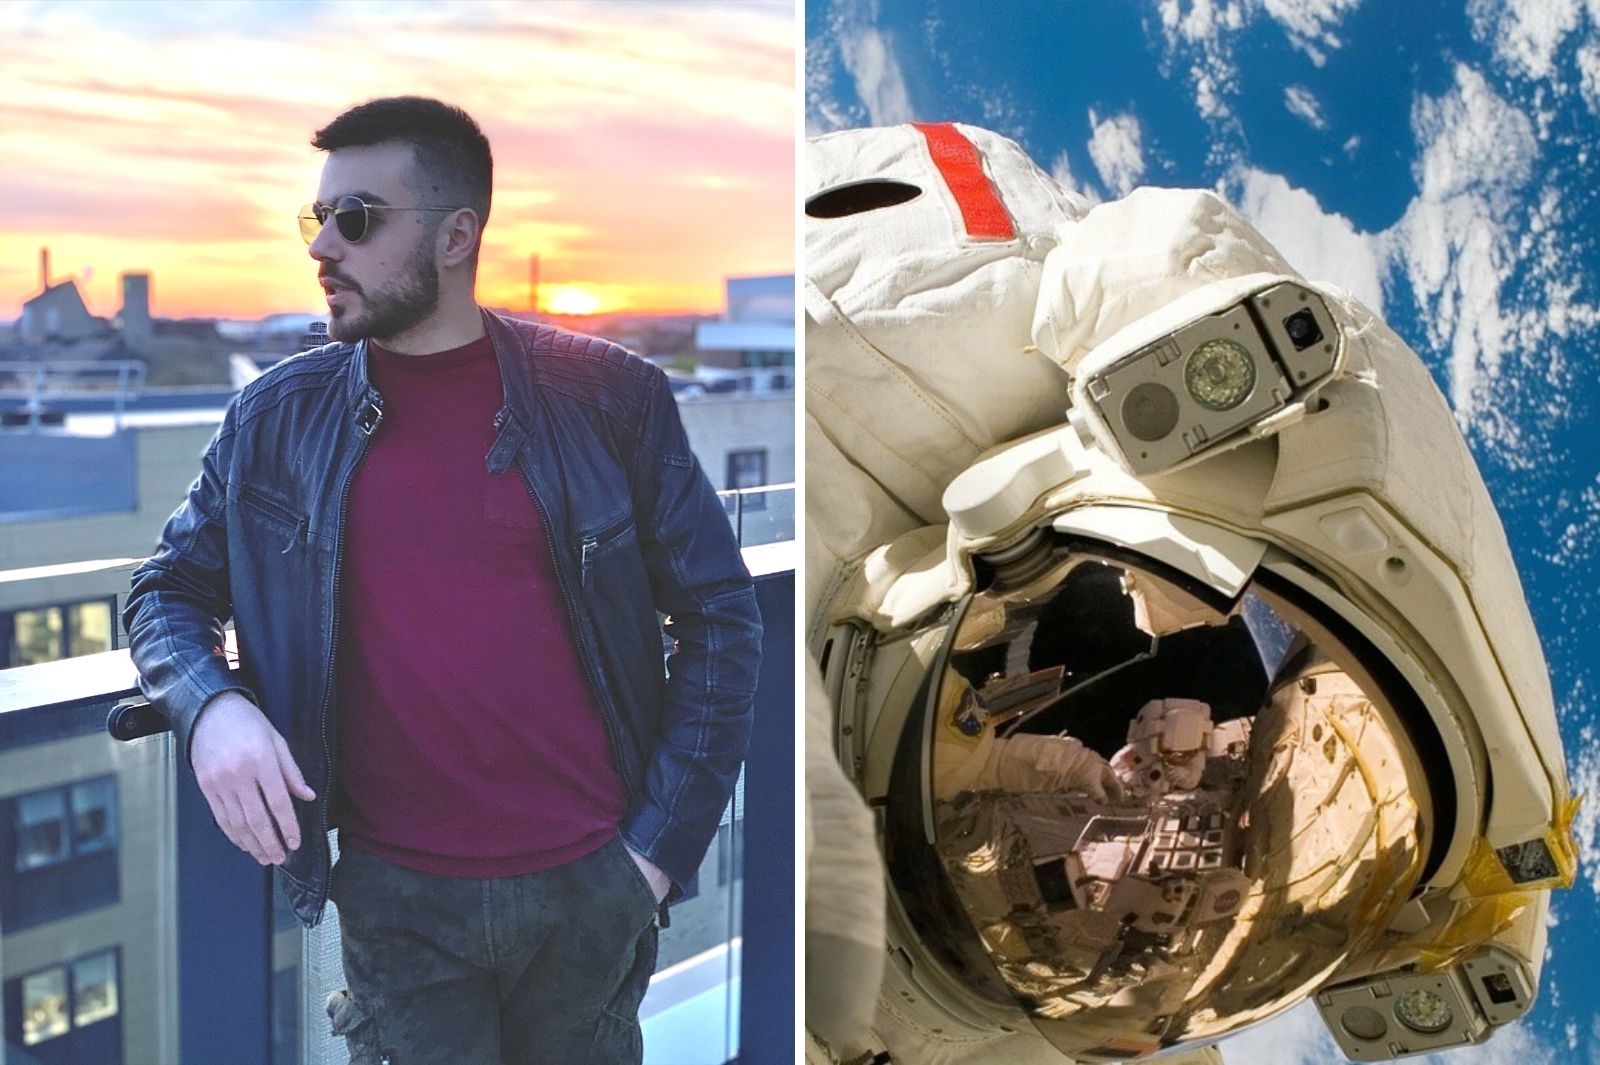 Alex Uifălean Engineering graduate astronaut